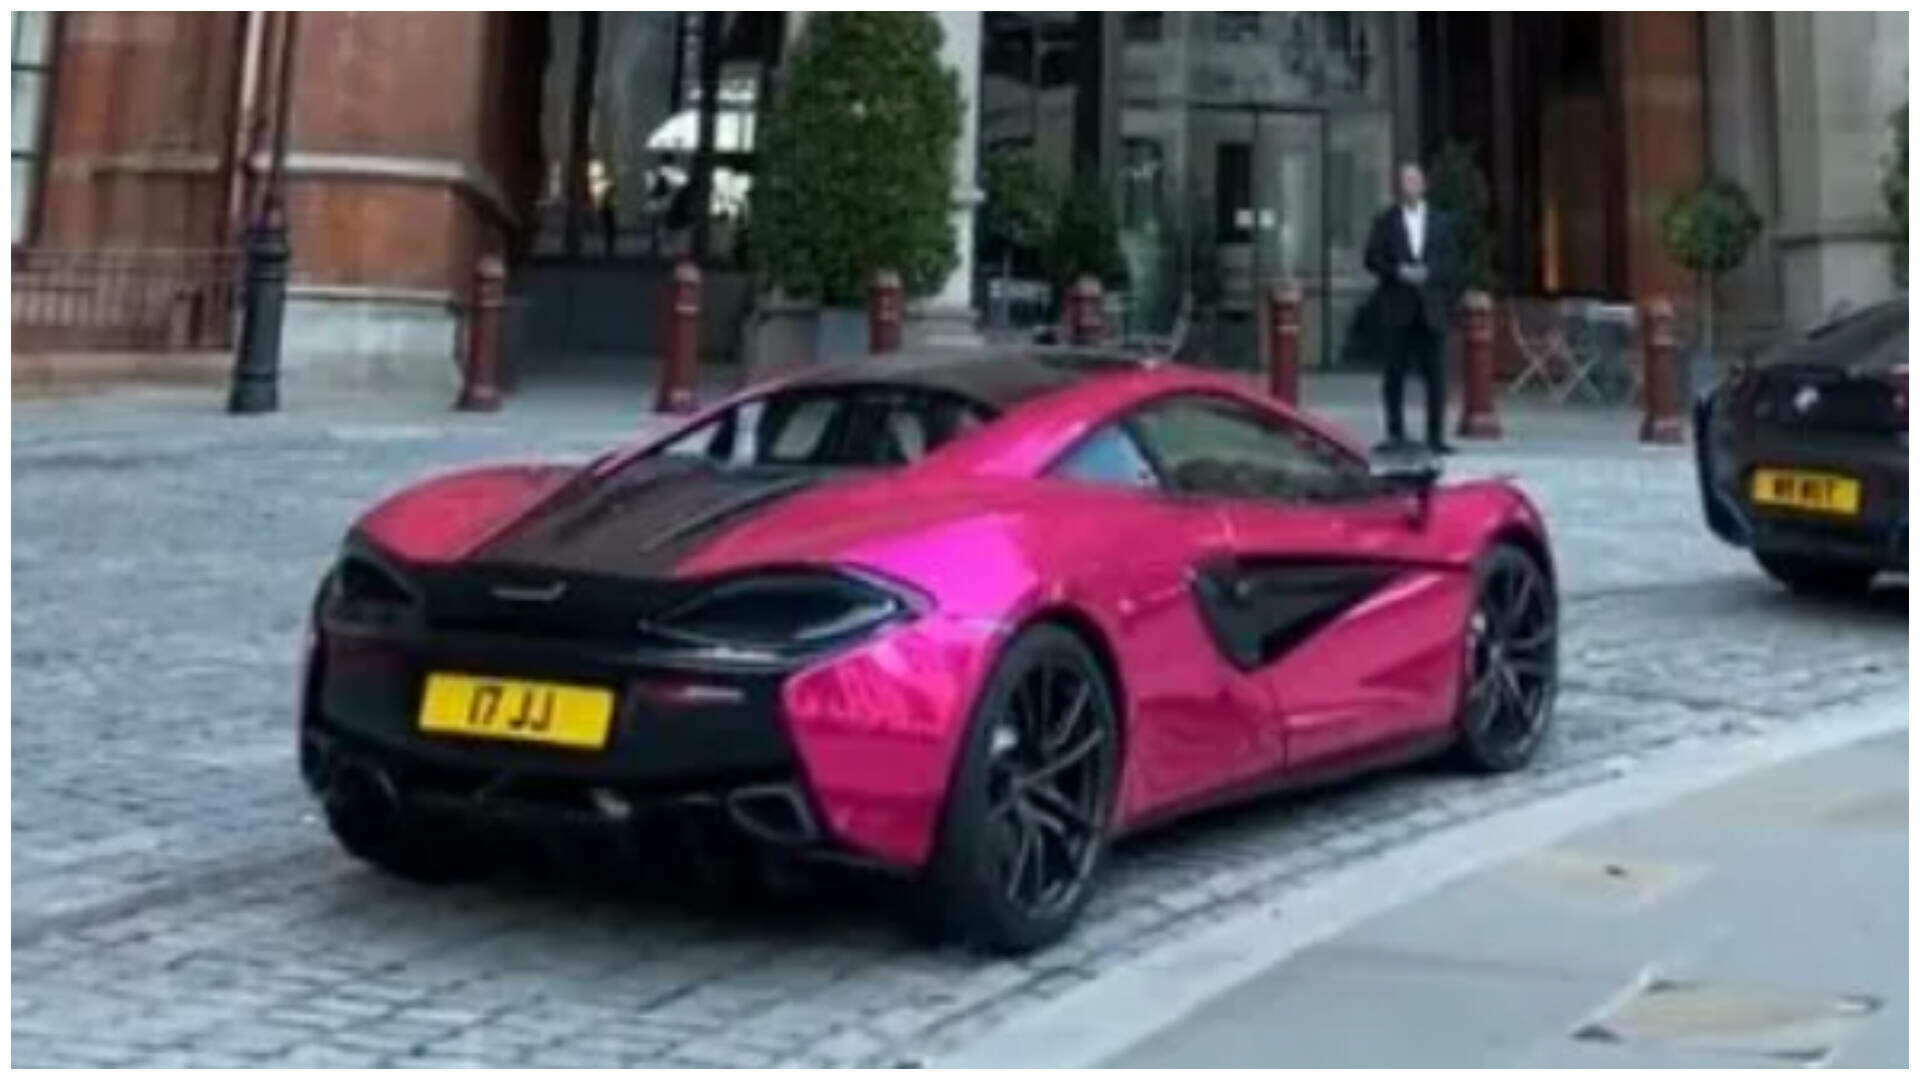 McLaren roz